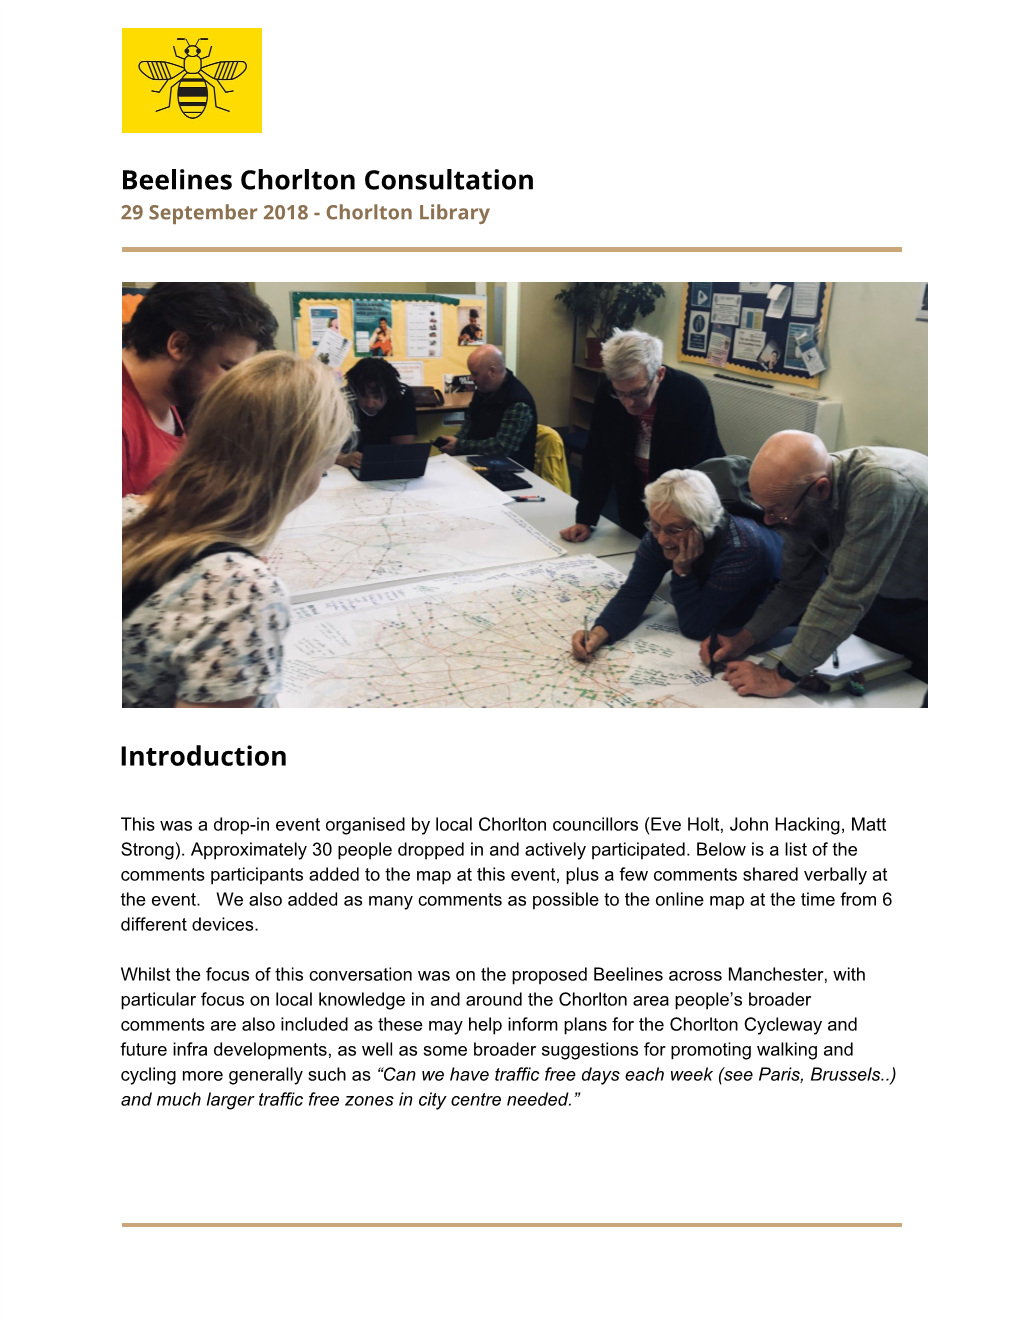 Beelines Chorlton Consultation Introduction